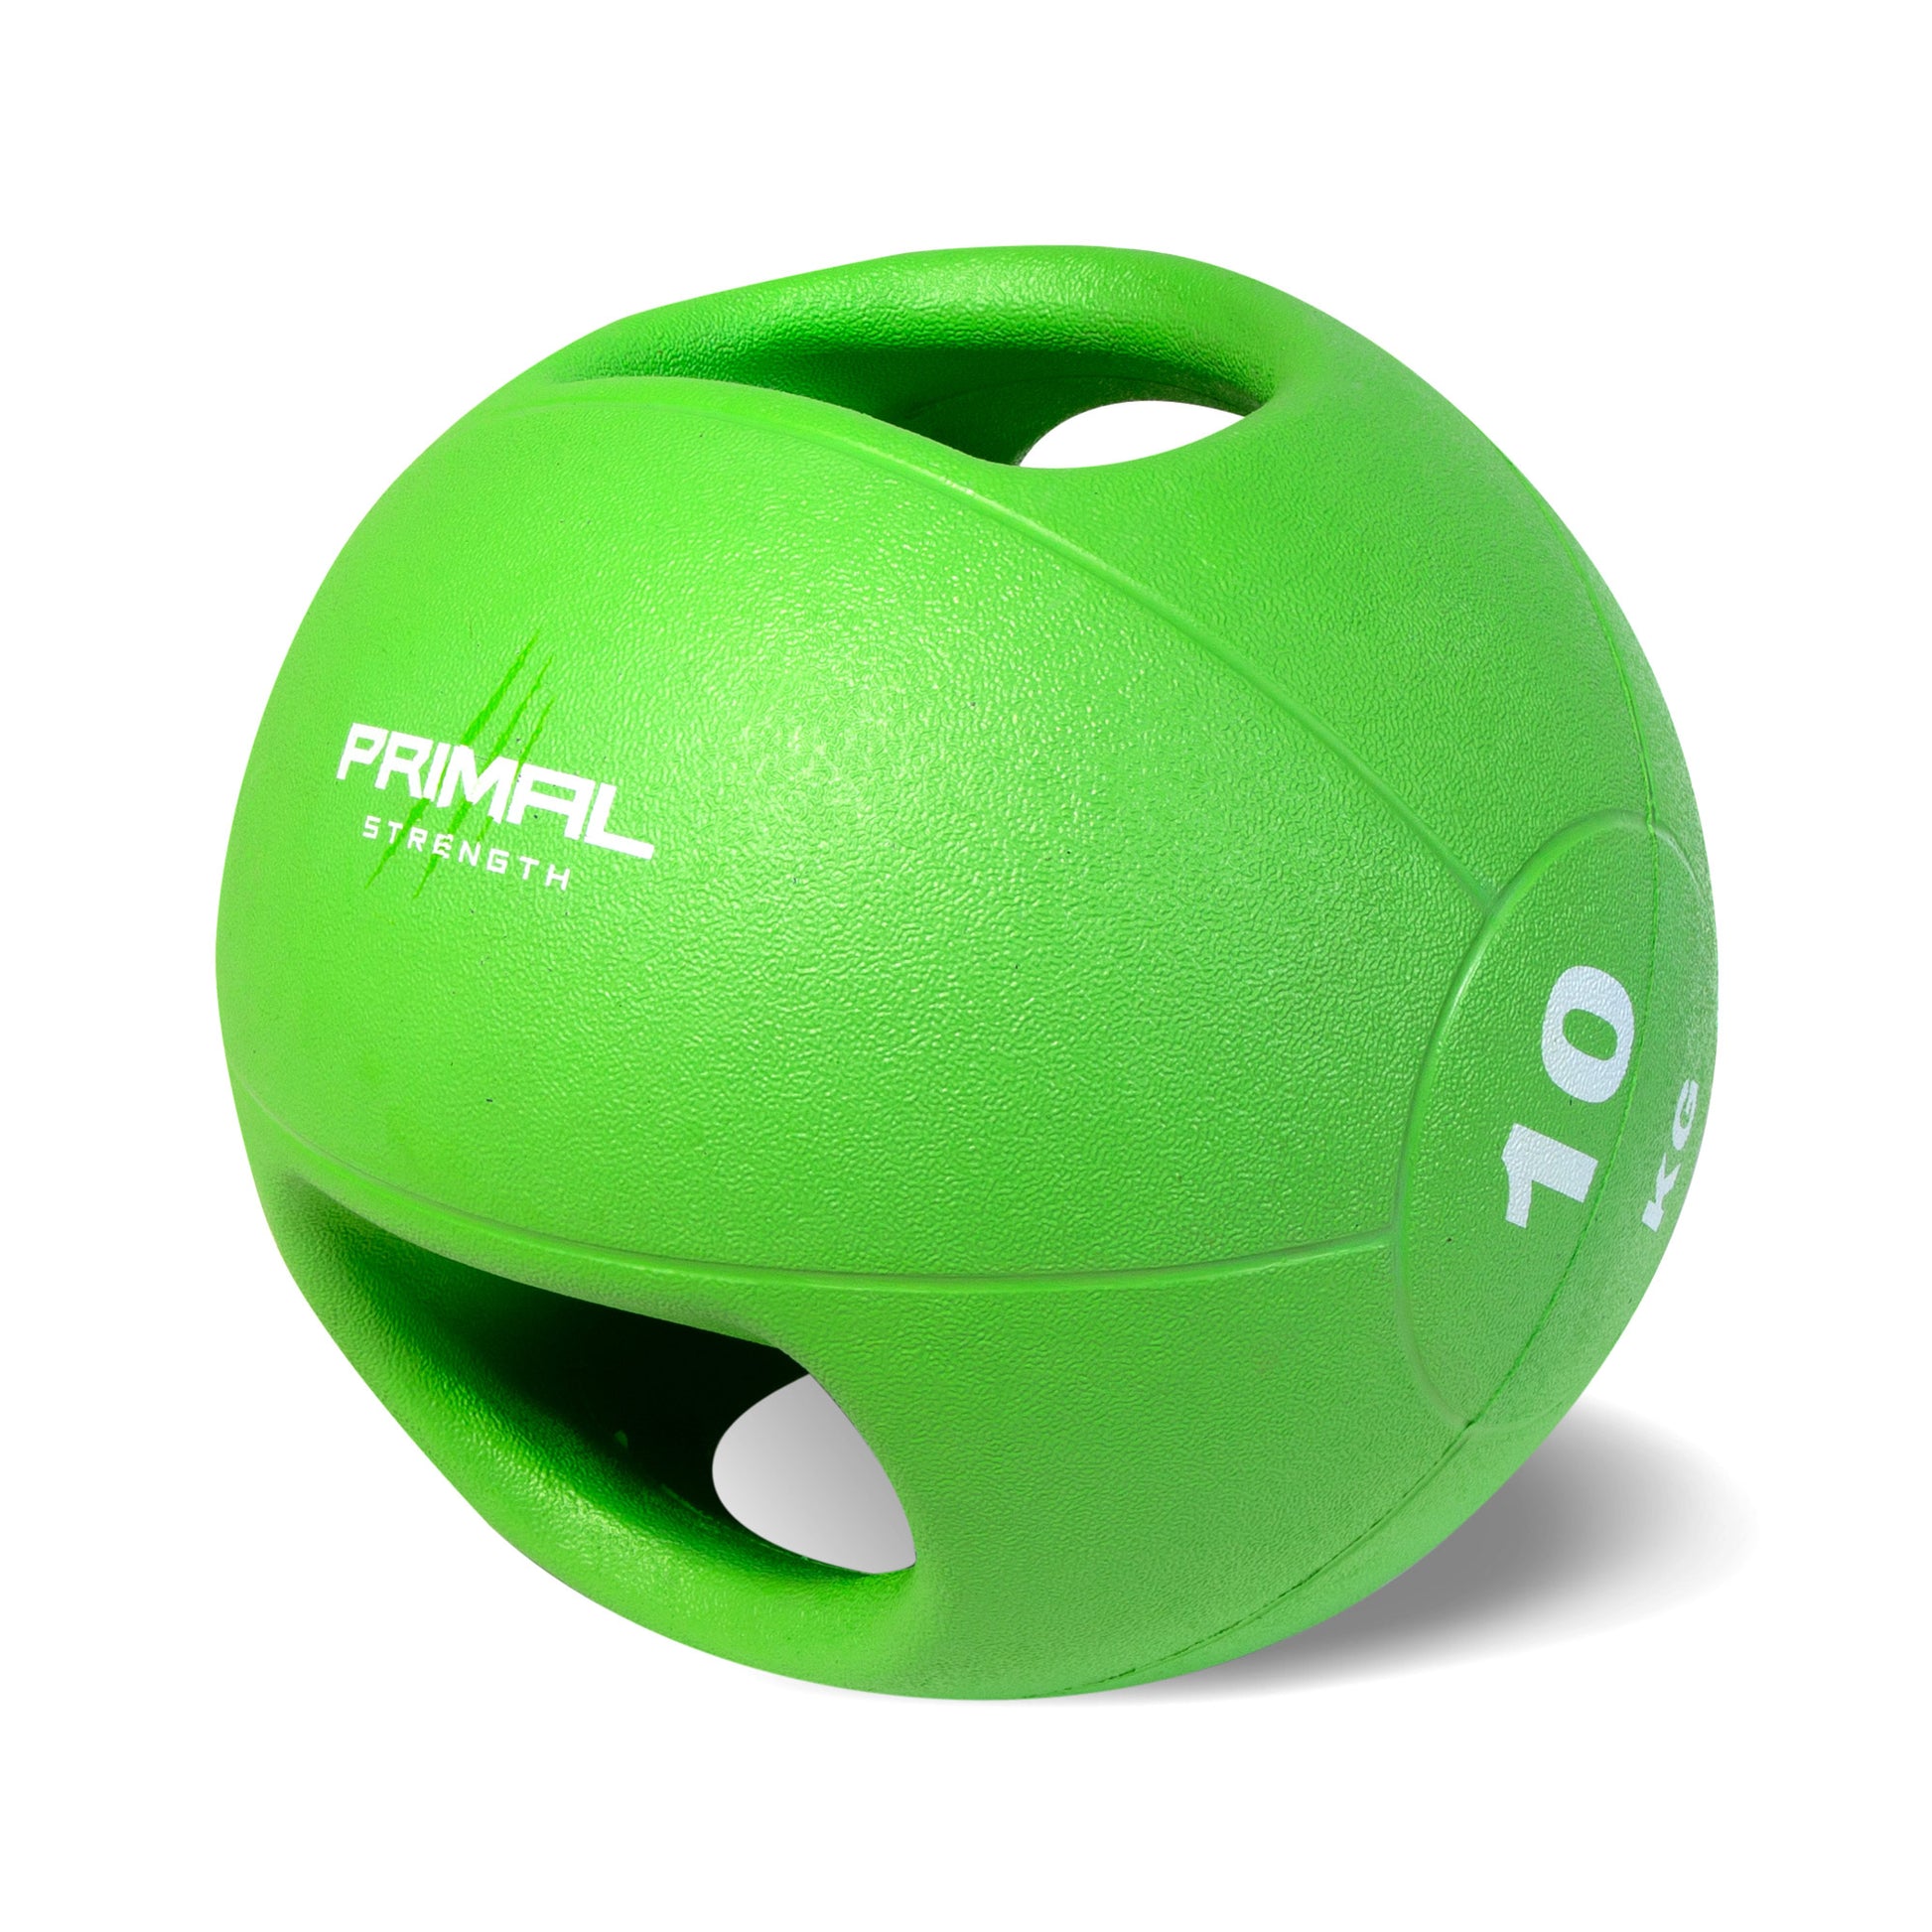 a green 10kg double handle medicine ball